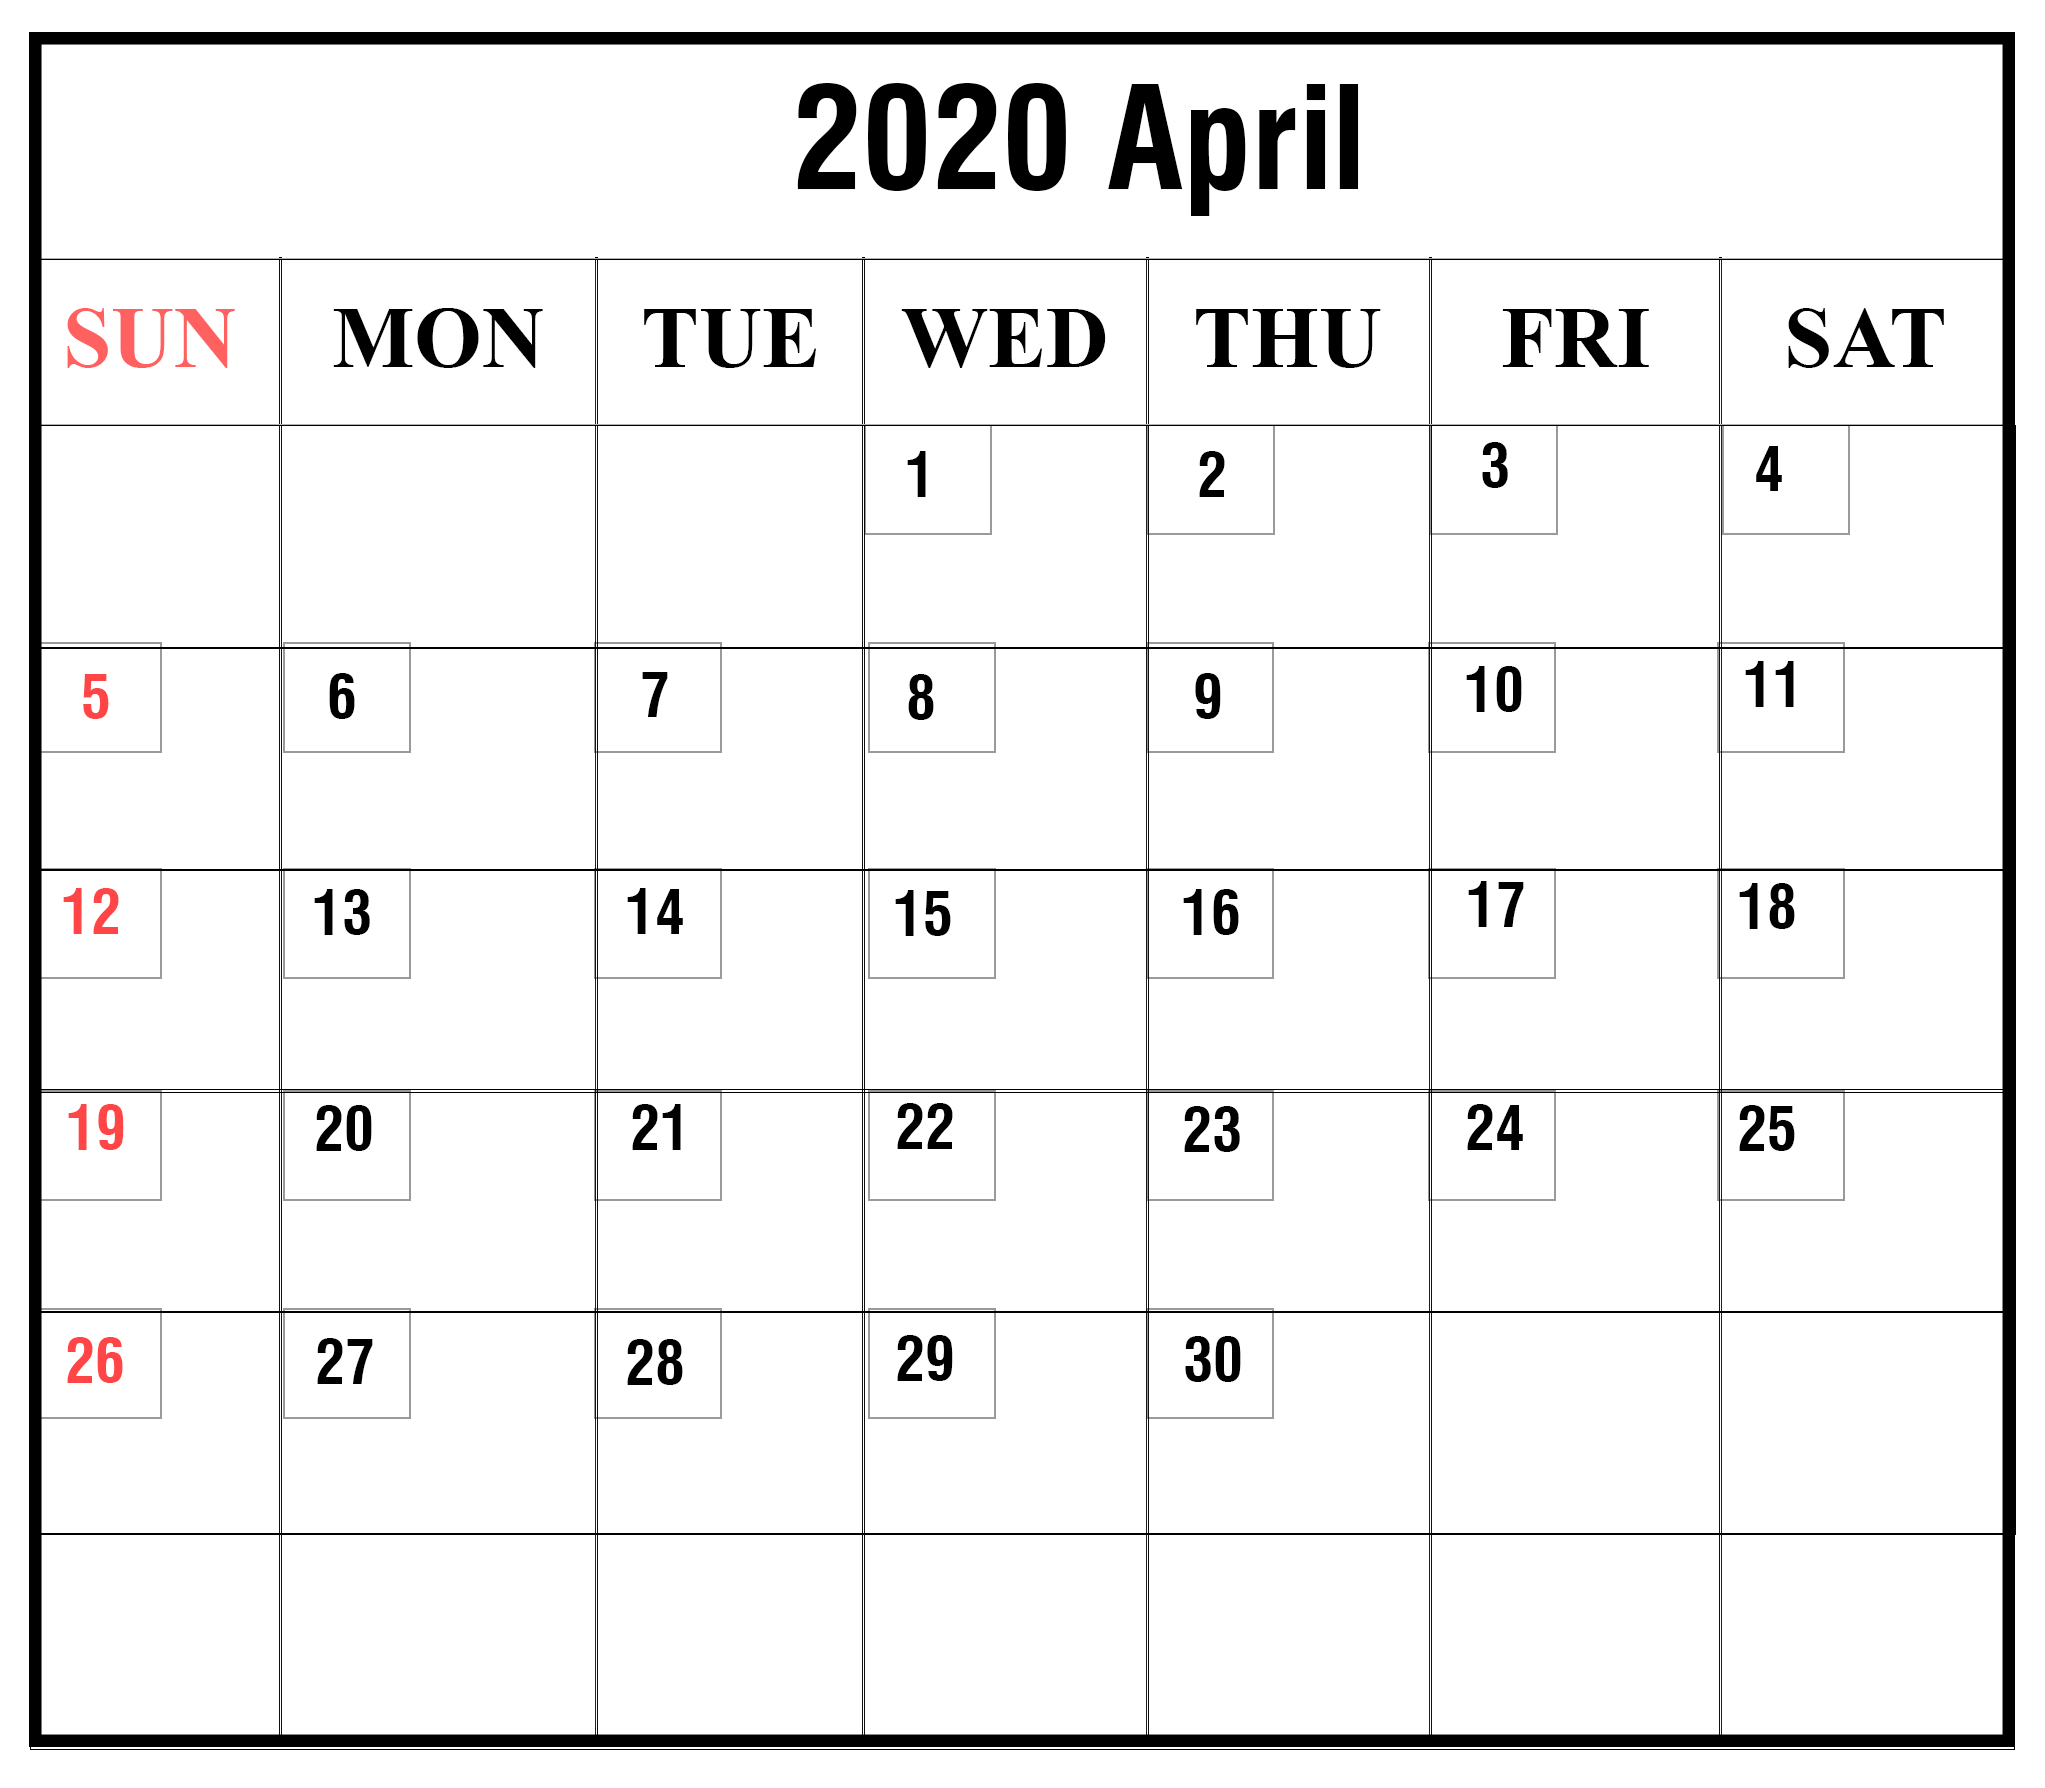 April 2020 Printable Calendar Template A4 Size